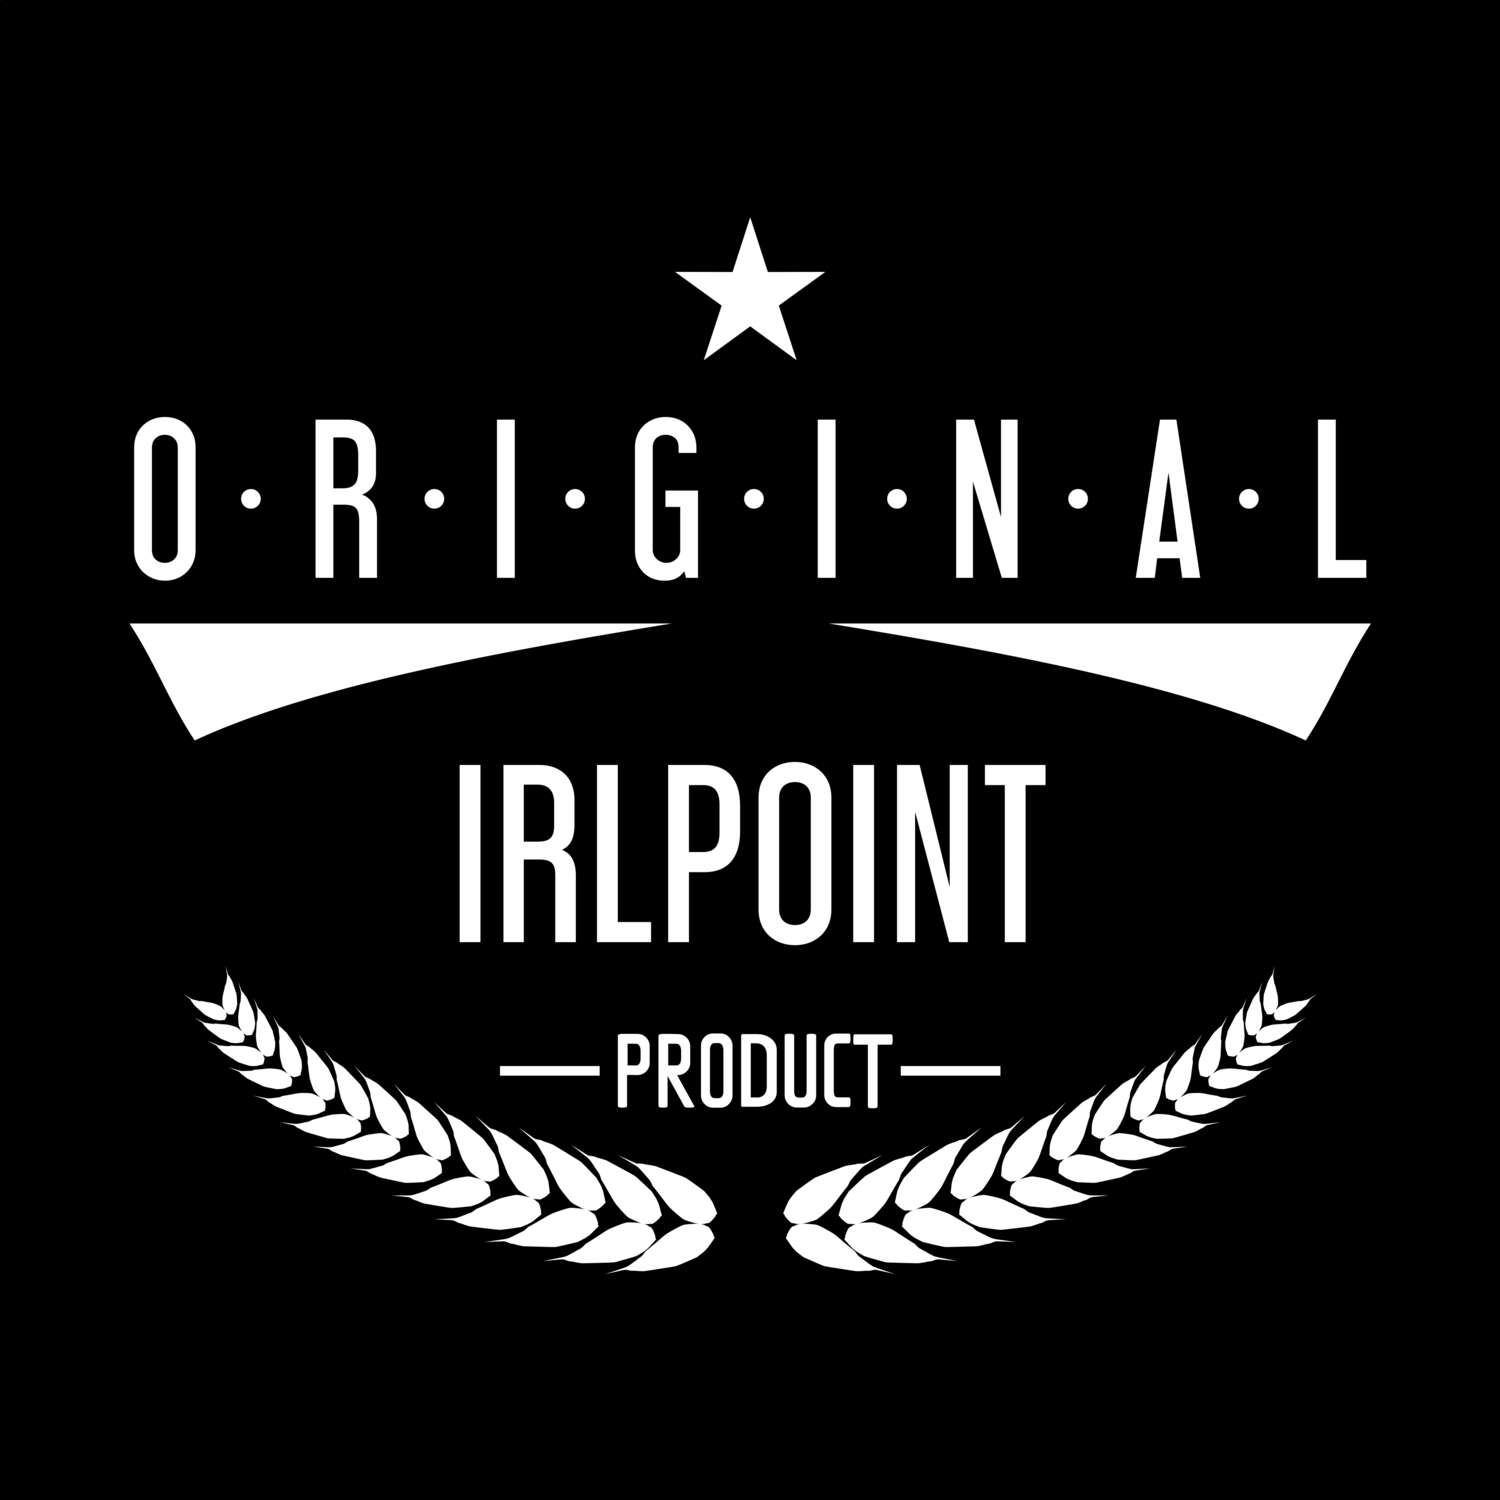 Irlpoint T-Shirt »Original Product«